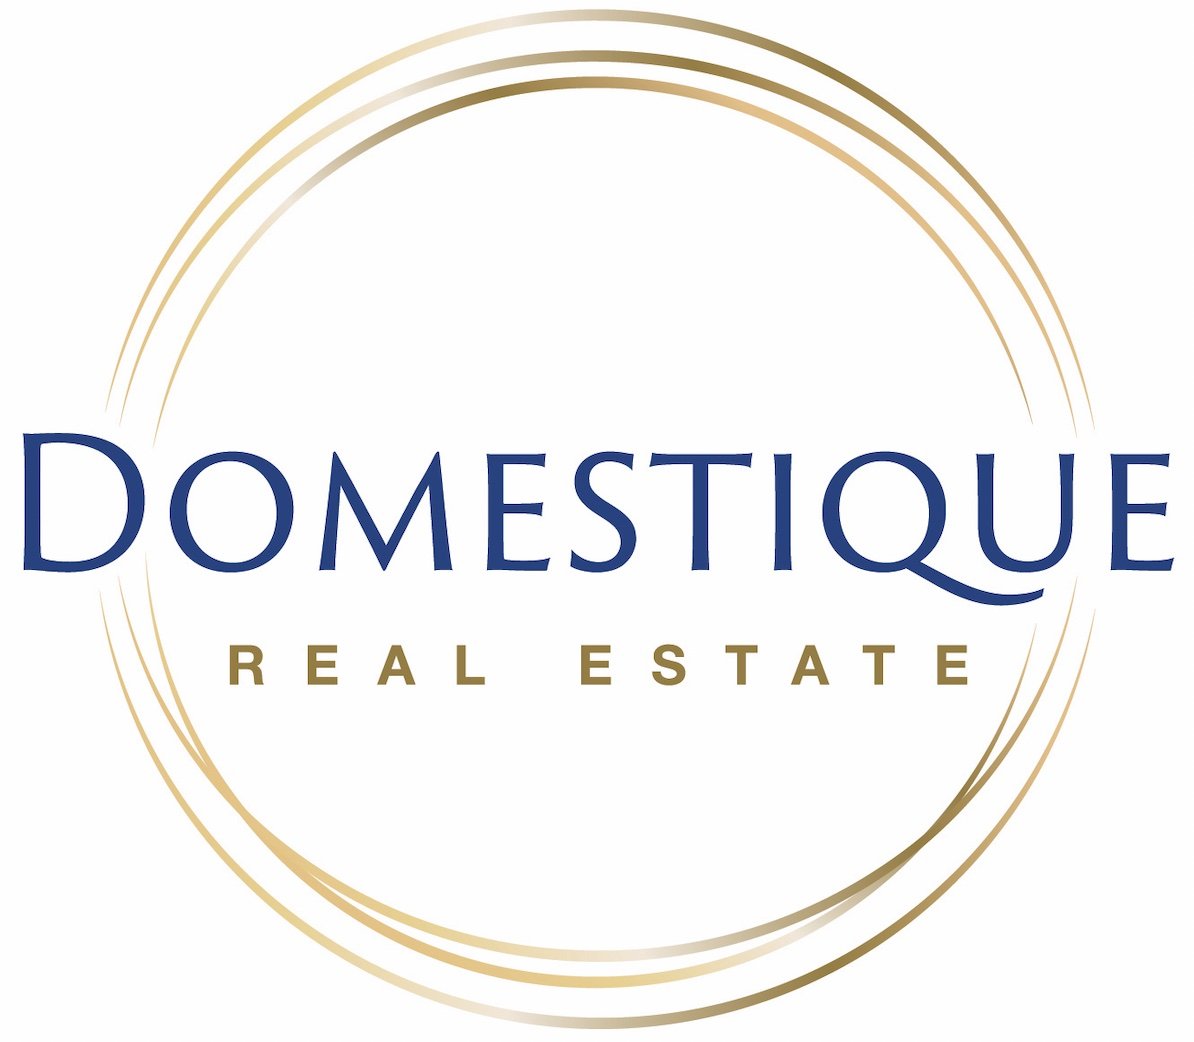 Domestique Real Estate.jpg